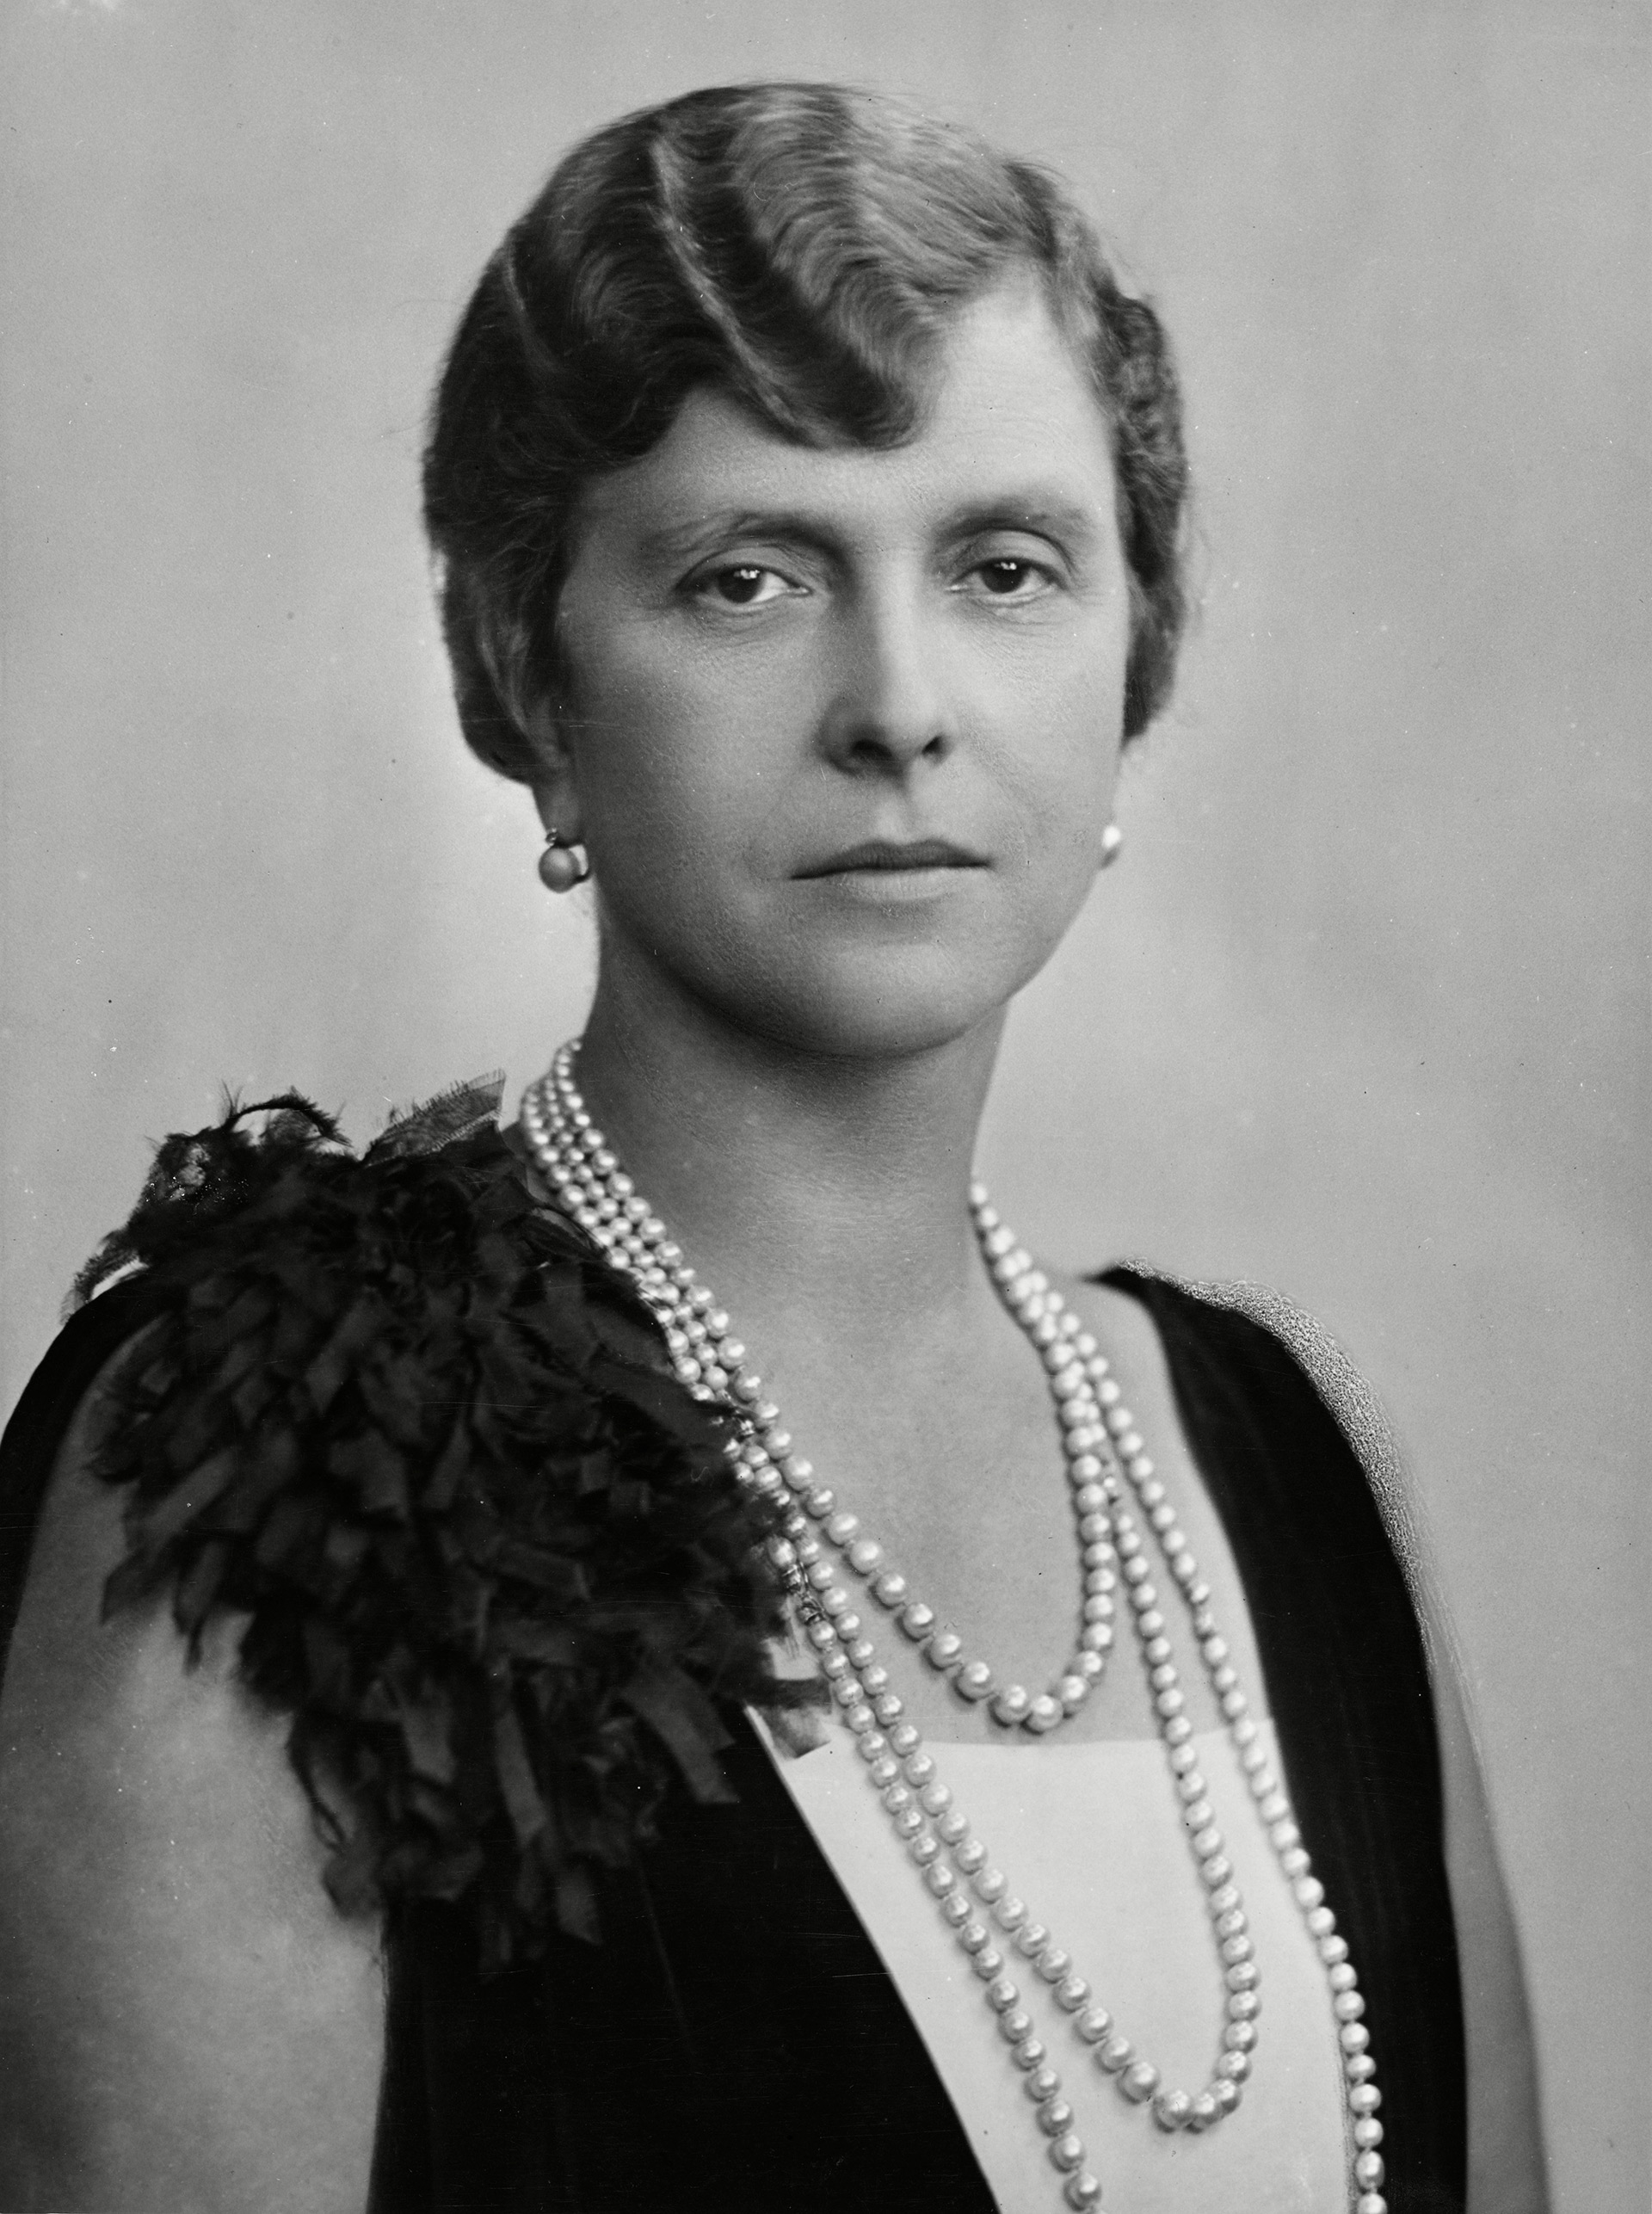 Alicia era bisnieta de la reina Victoria de Inglaterra y terminó siendo la suegra de la actual reina Isabel II (Shutterstock)
